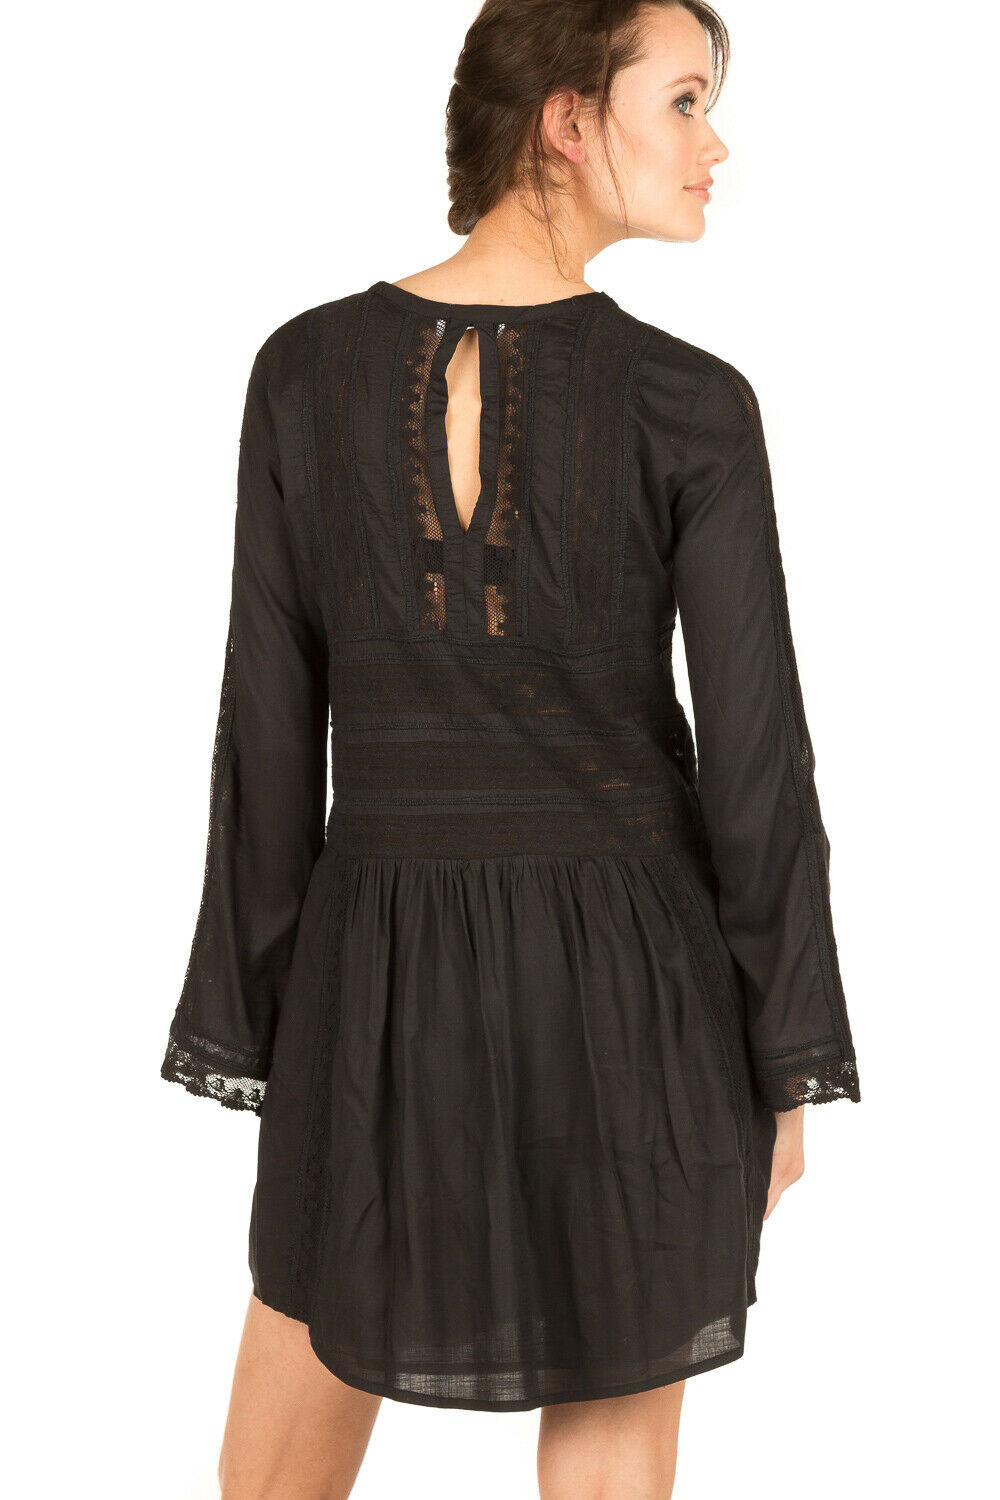 IRO Kelen Lace Black Tunic Dress